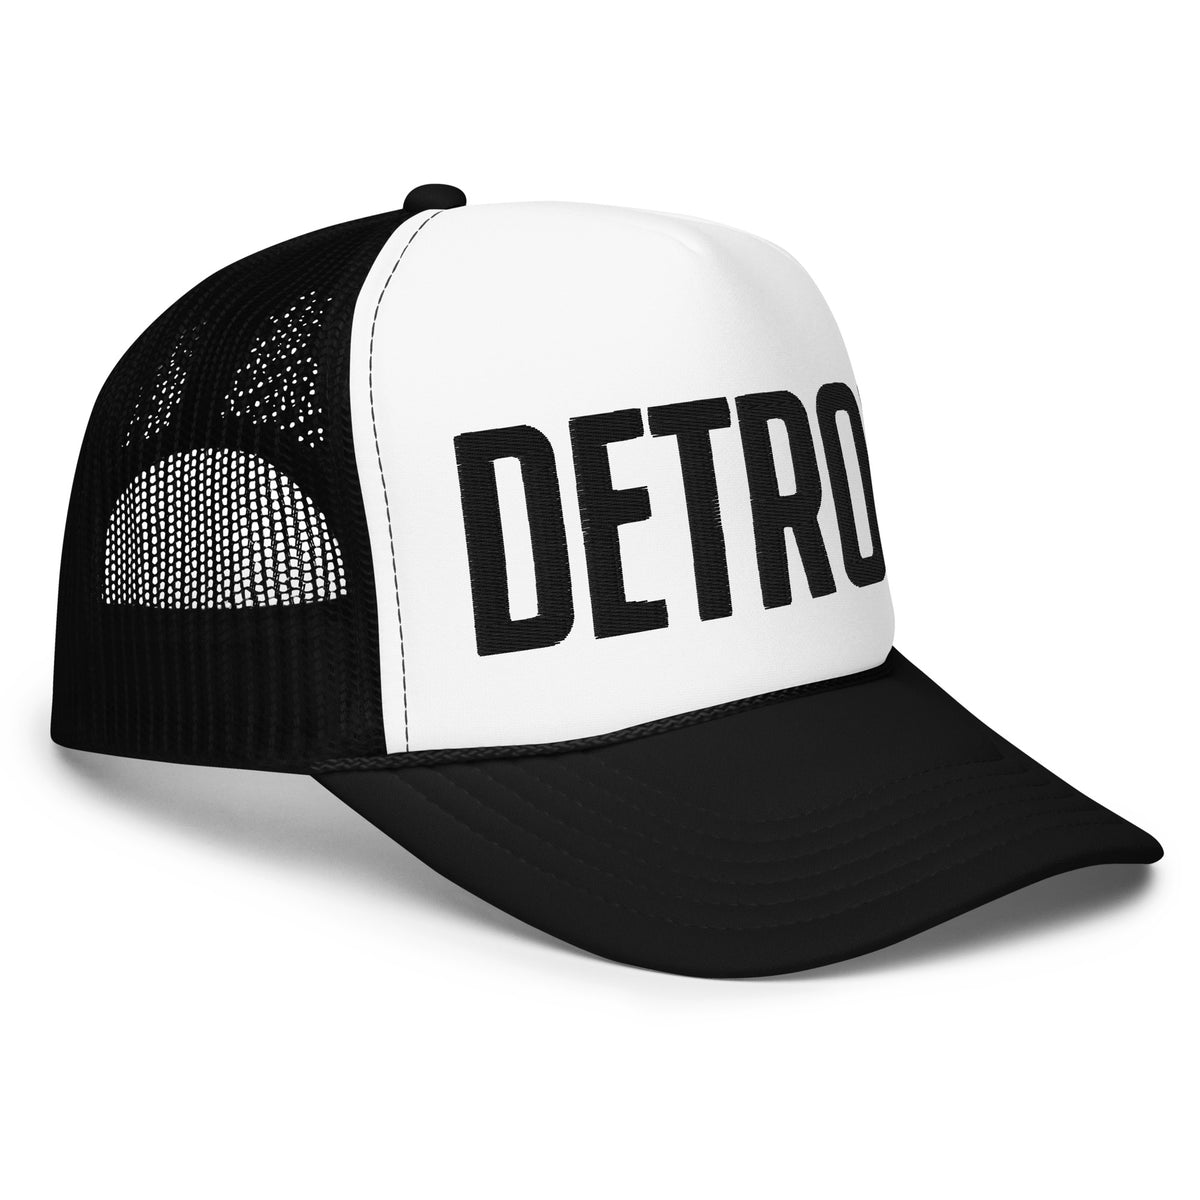 Detroit Foam Trucker Hat - Black & White - Embroidered Hat   